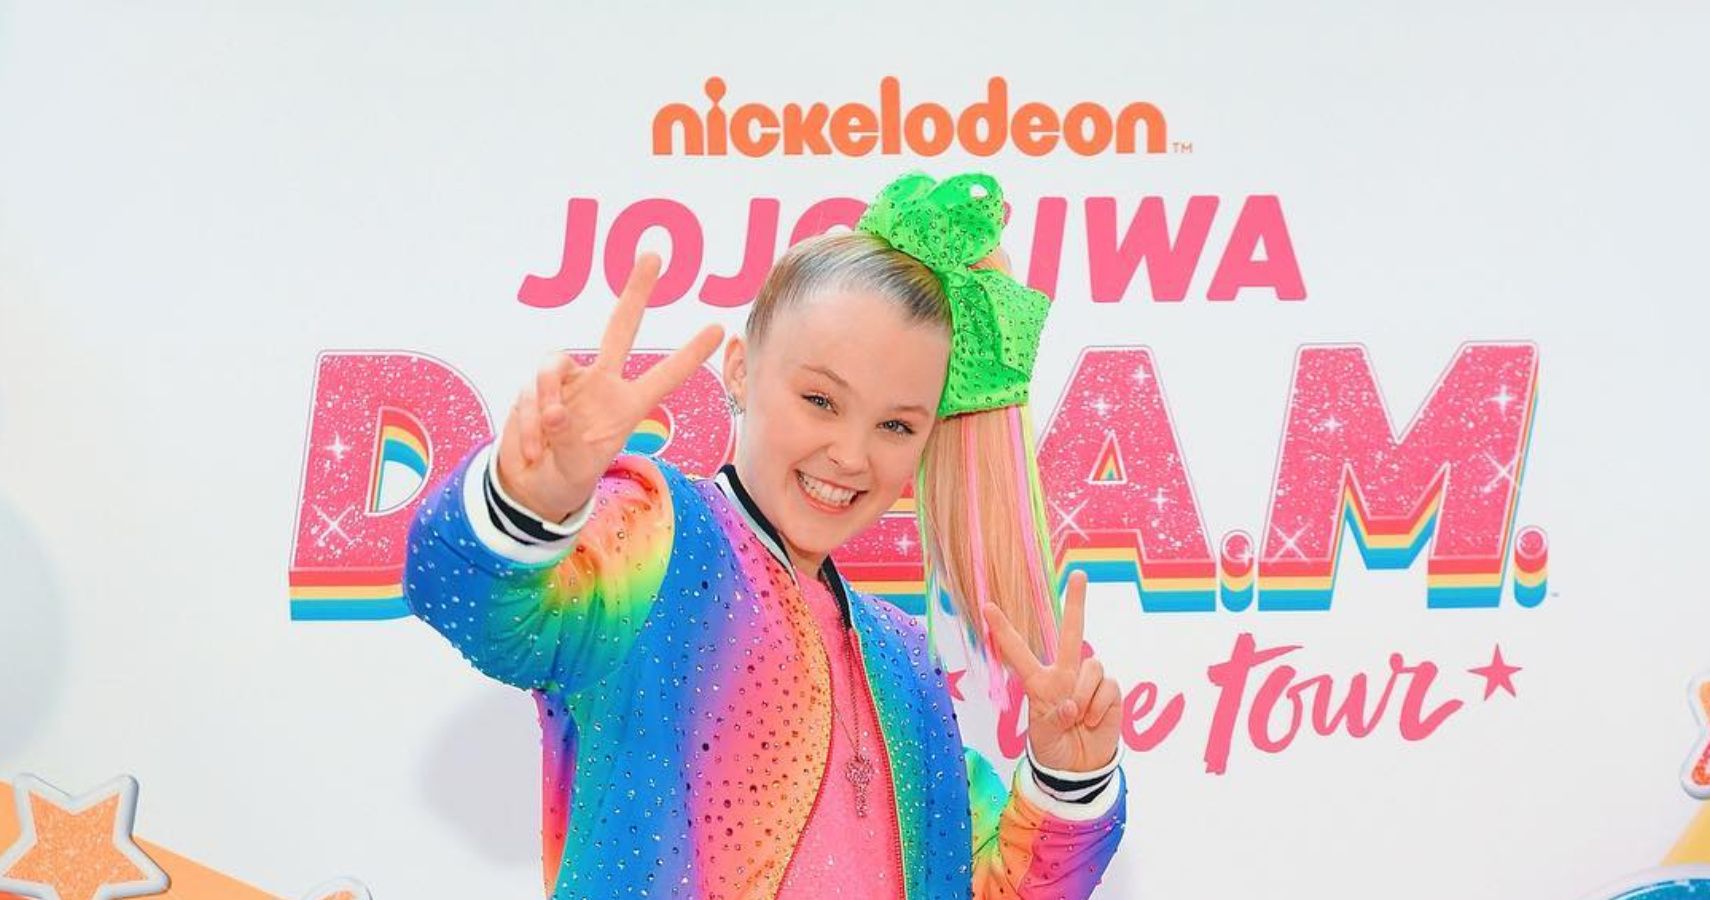 Nickelodeon Superstar JoJo Siwa Announces FirstEver U.S. Concert Tour